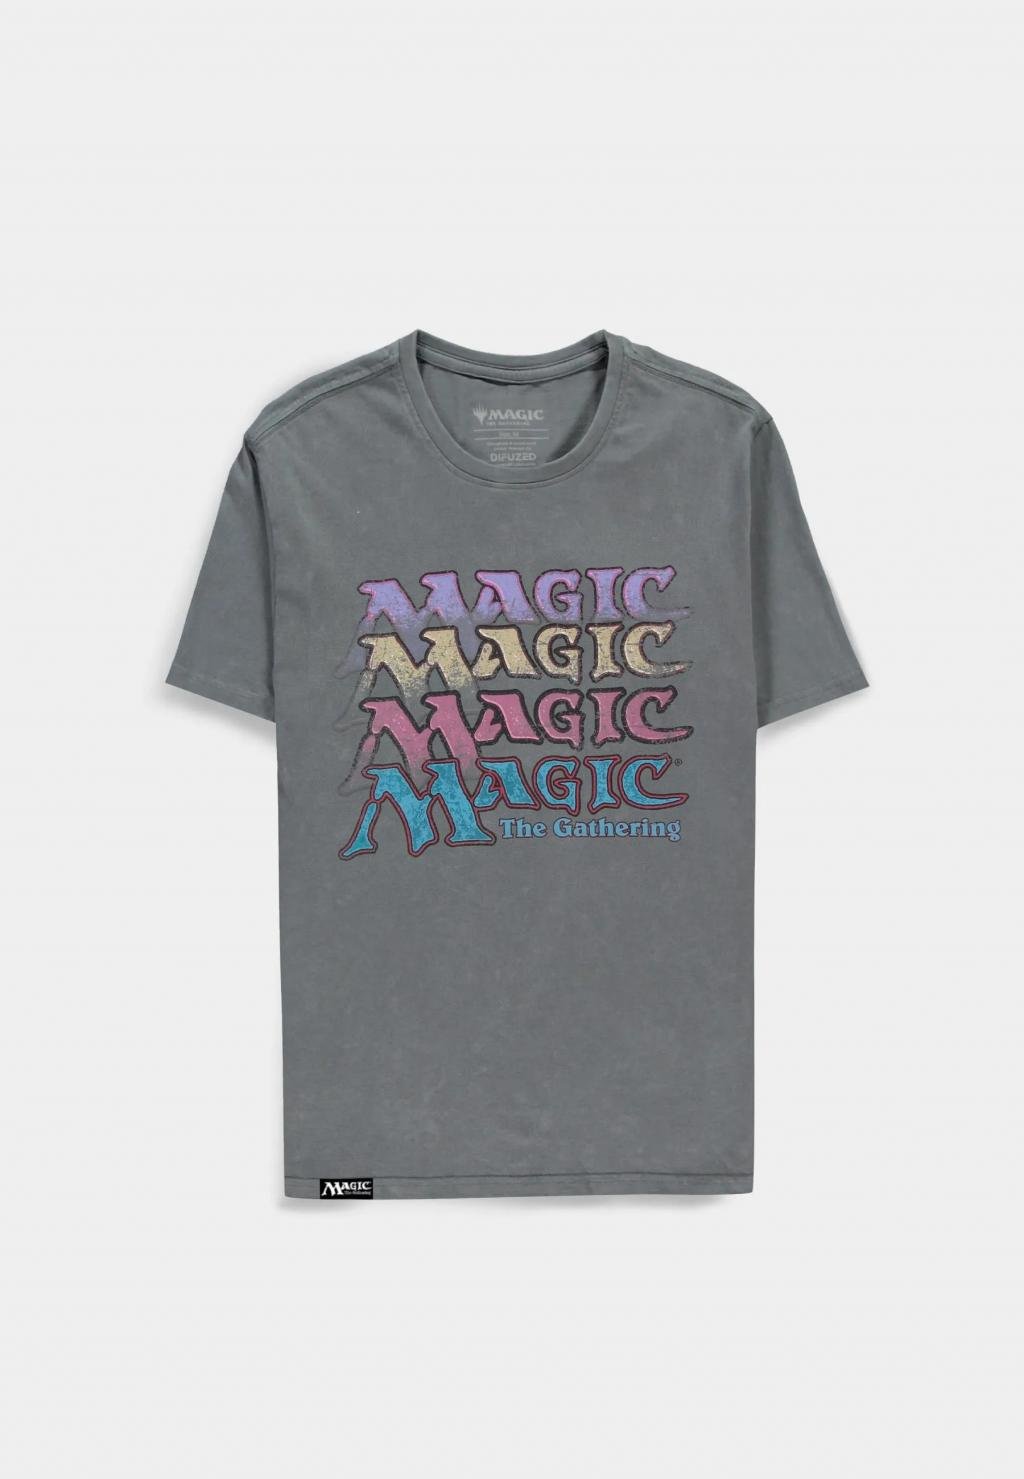 MAGIC THE GATHERING - Logo - Men's T-shirt (M)